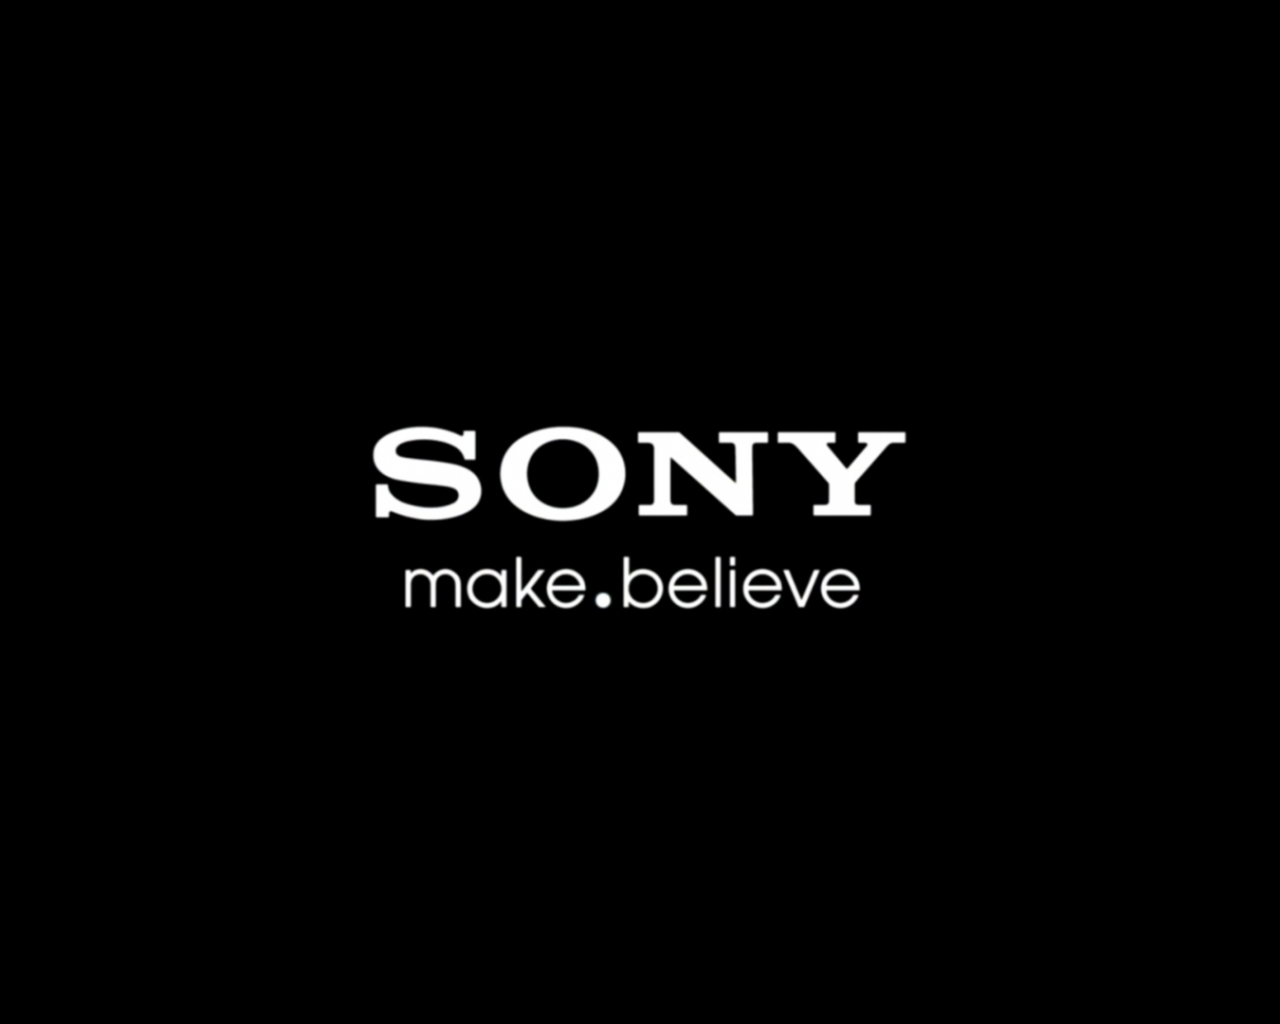 believe, sony, logo, make